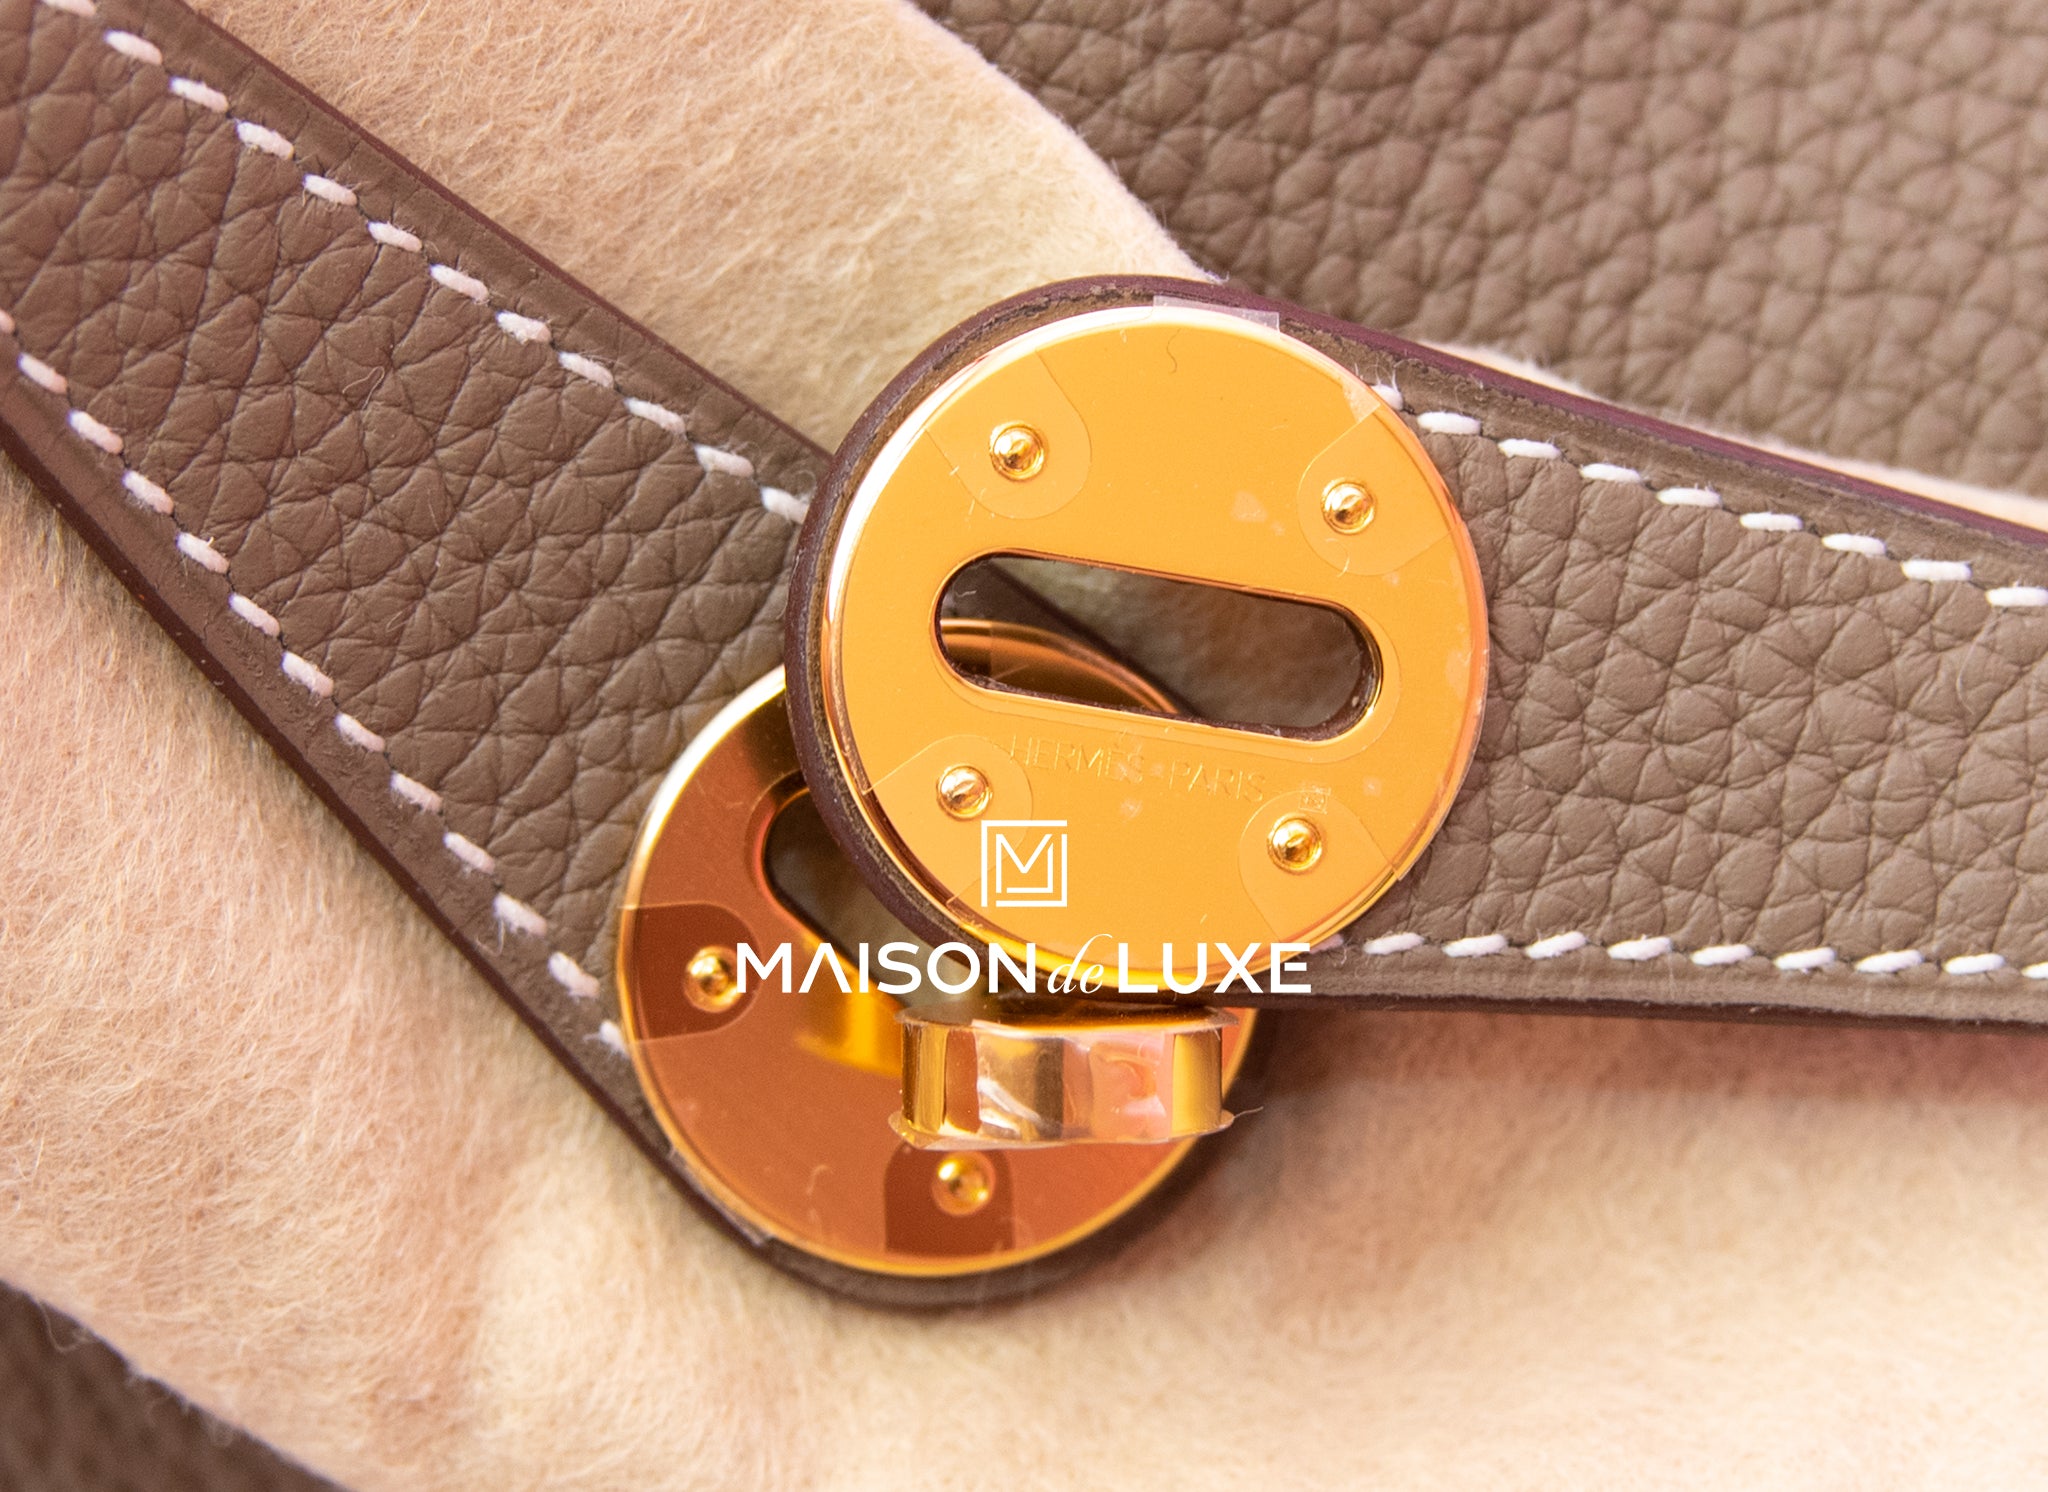 Hermès Hermès Lindy 26 Taurillon Clemence Leather Handbag-Etoupe Gold  Hardware (Top Handle)